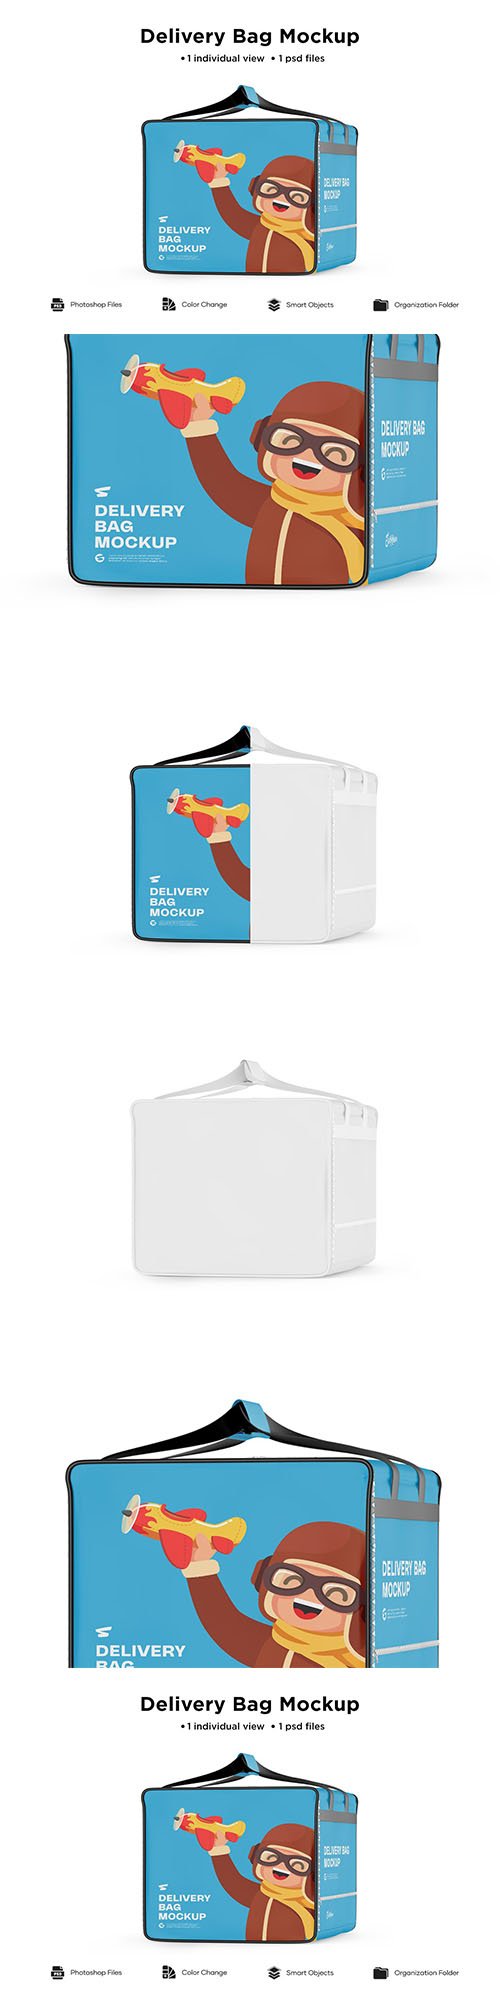 CreativeMarket - Delivery Bag Mockup - 6063305